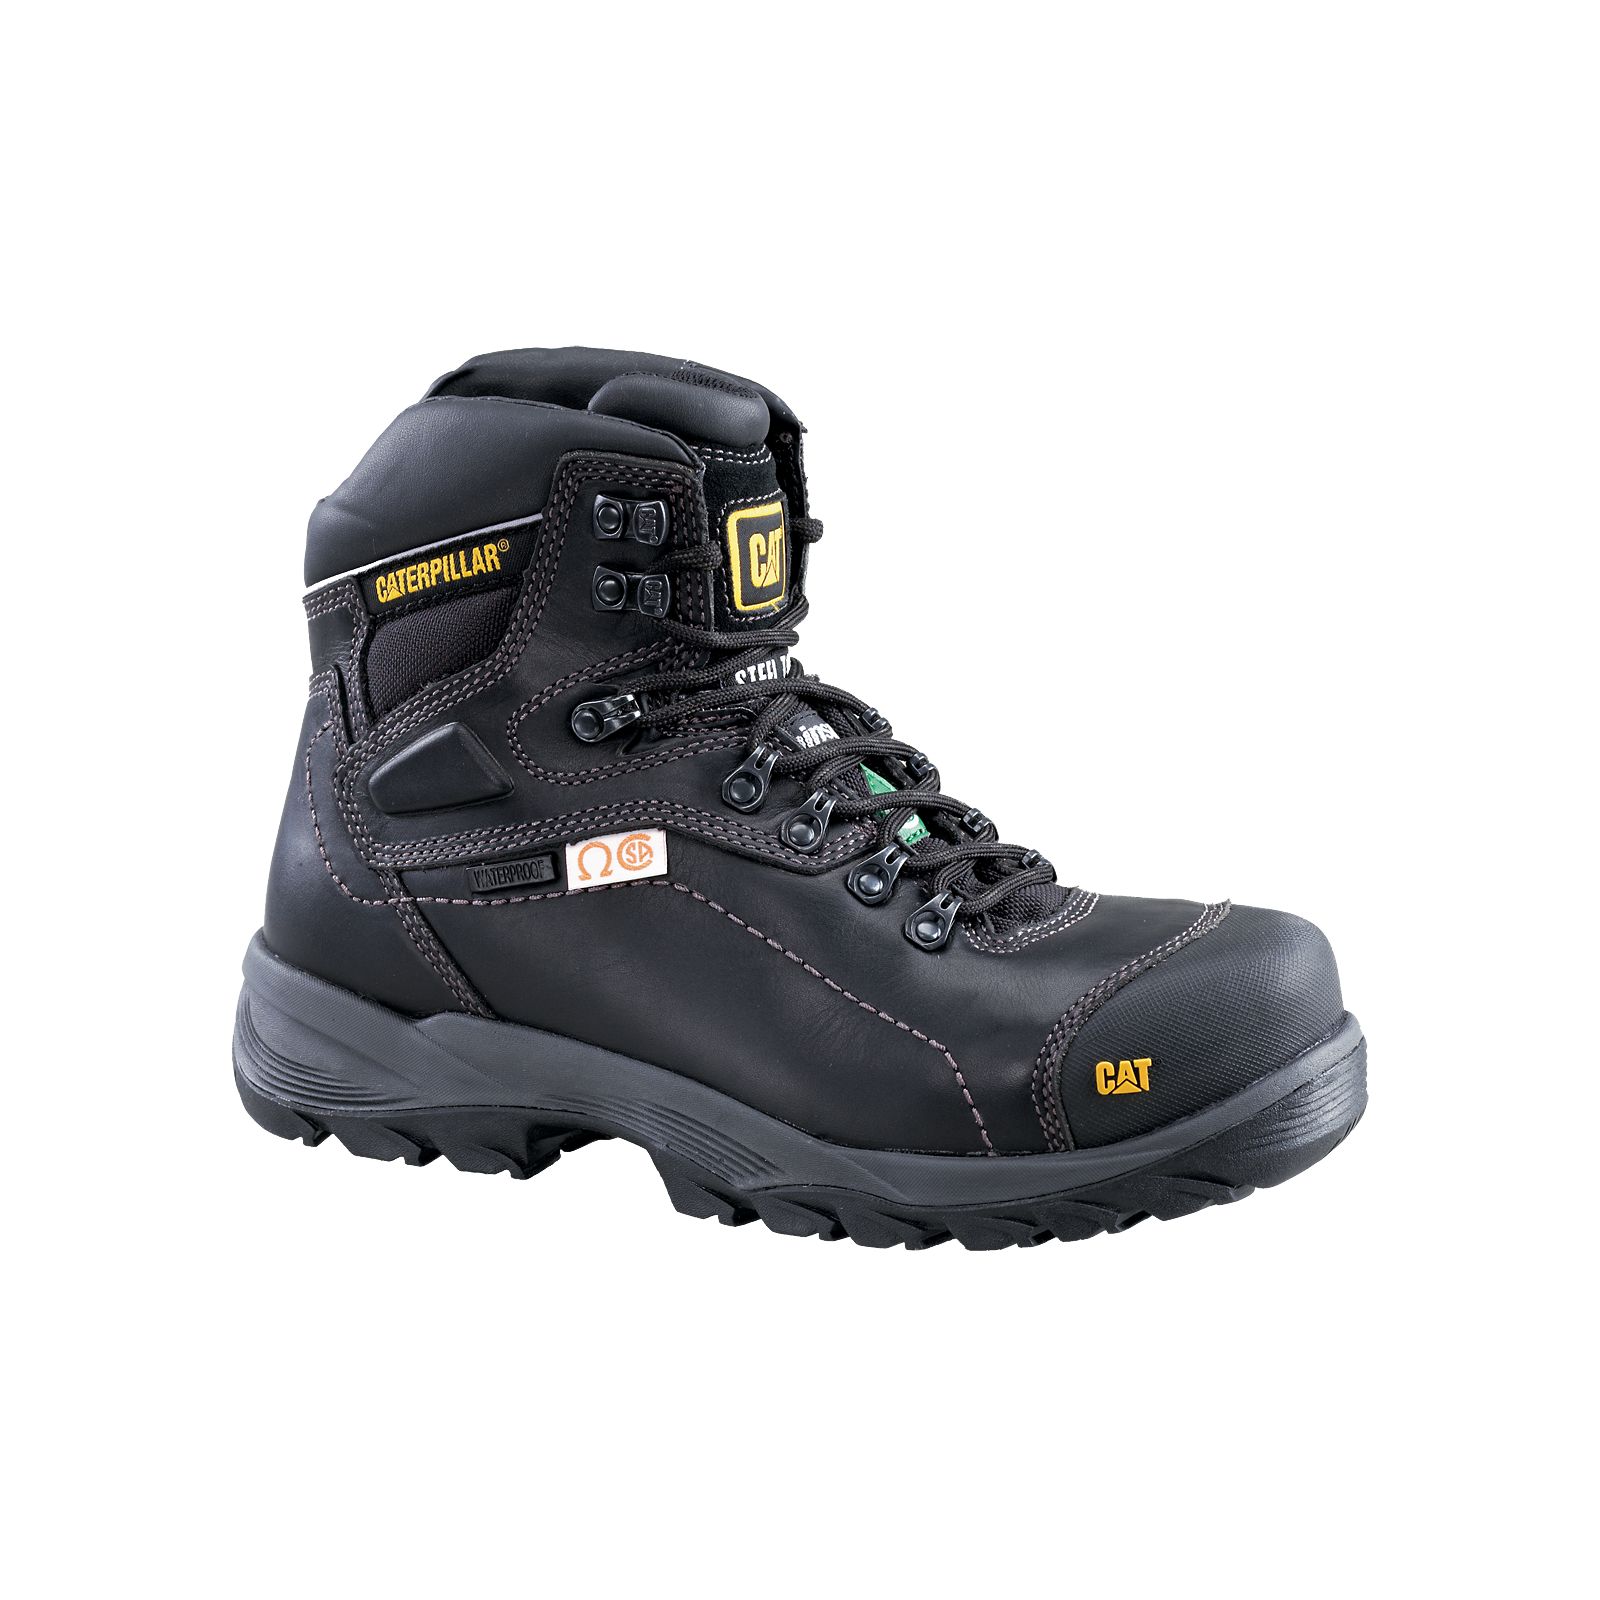 Black Caterpillar Diagnostic Hi Csa (Waterproof) Men's Work Boots | Cat-453891